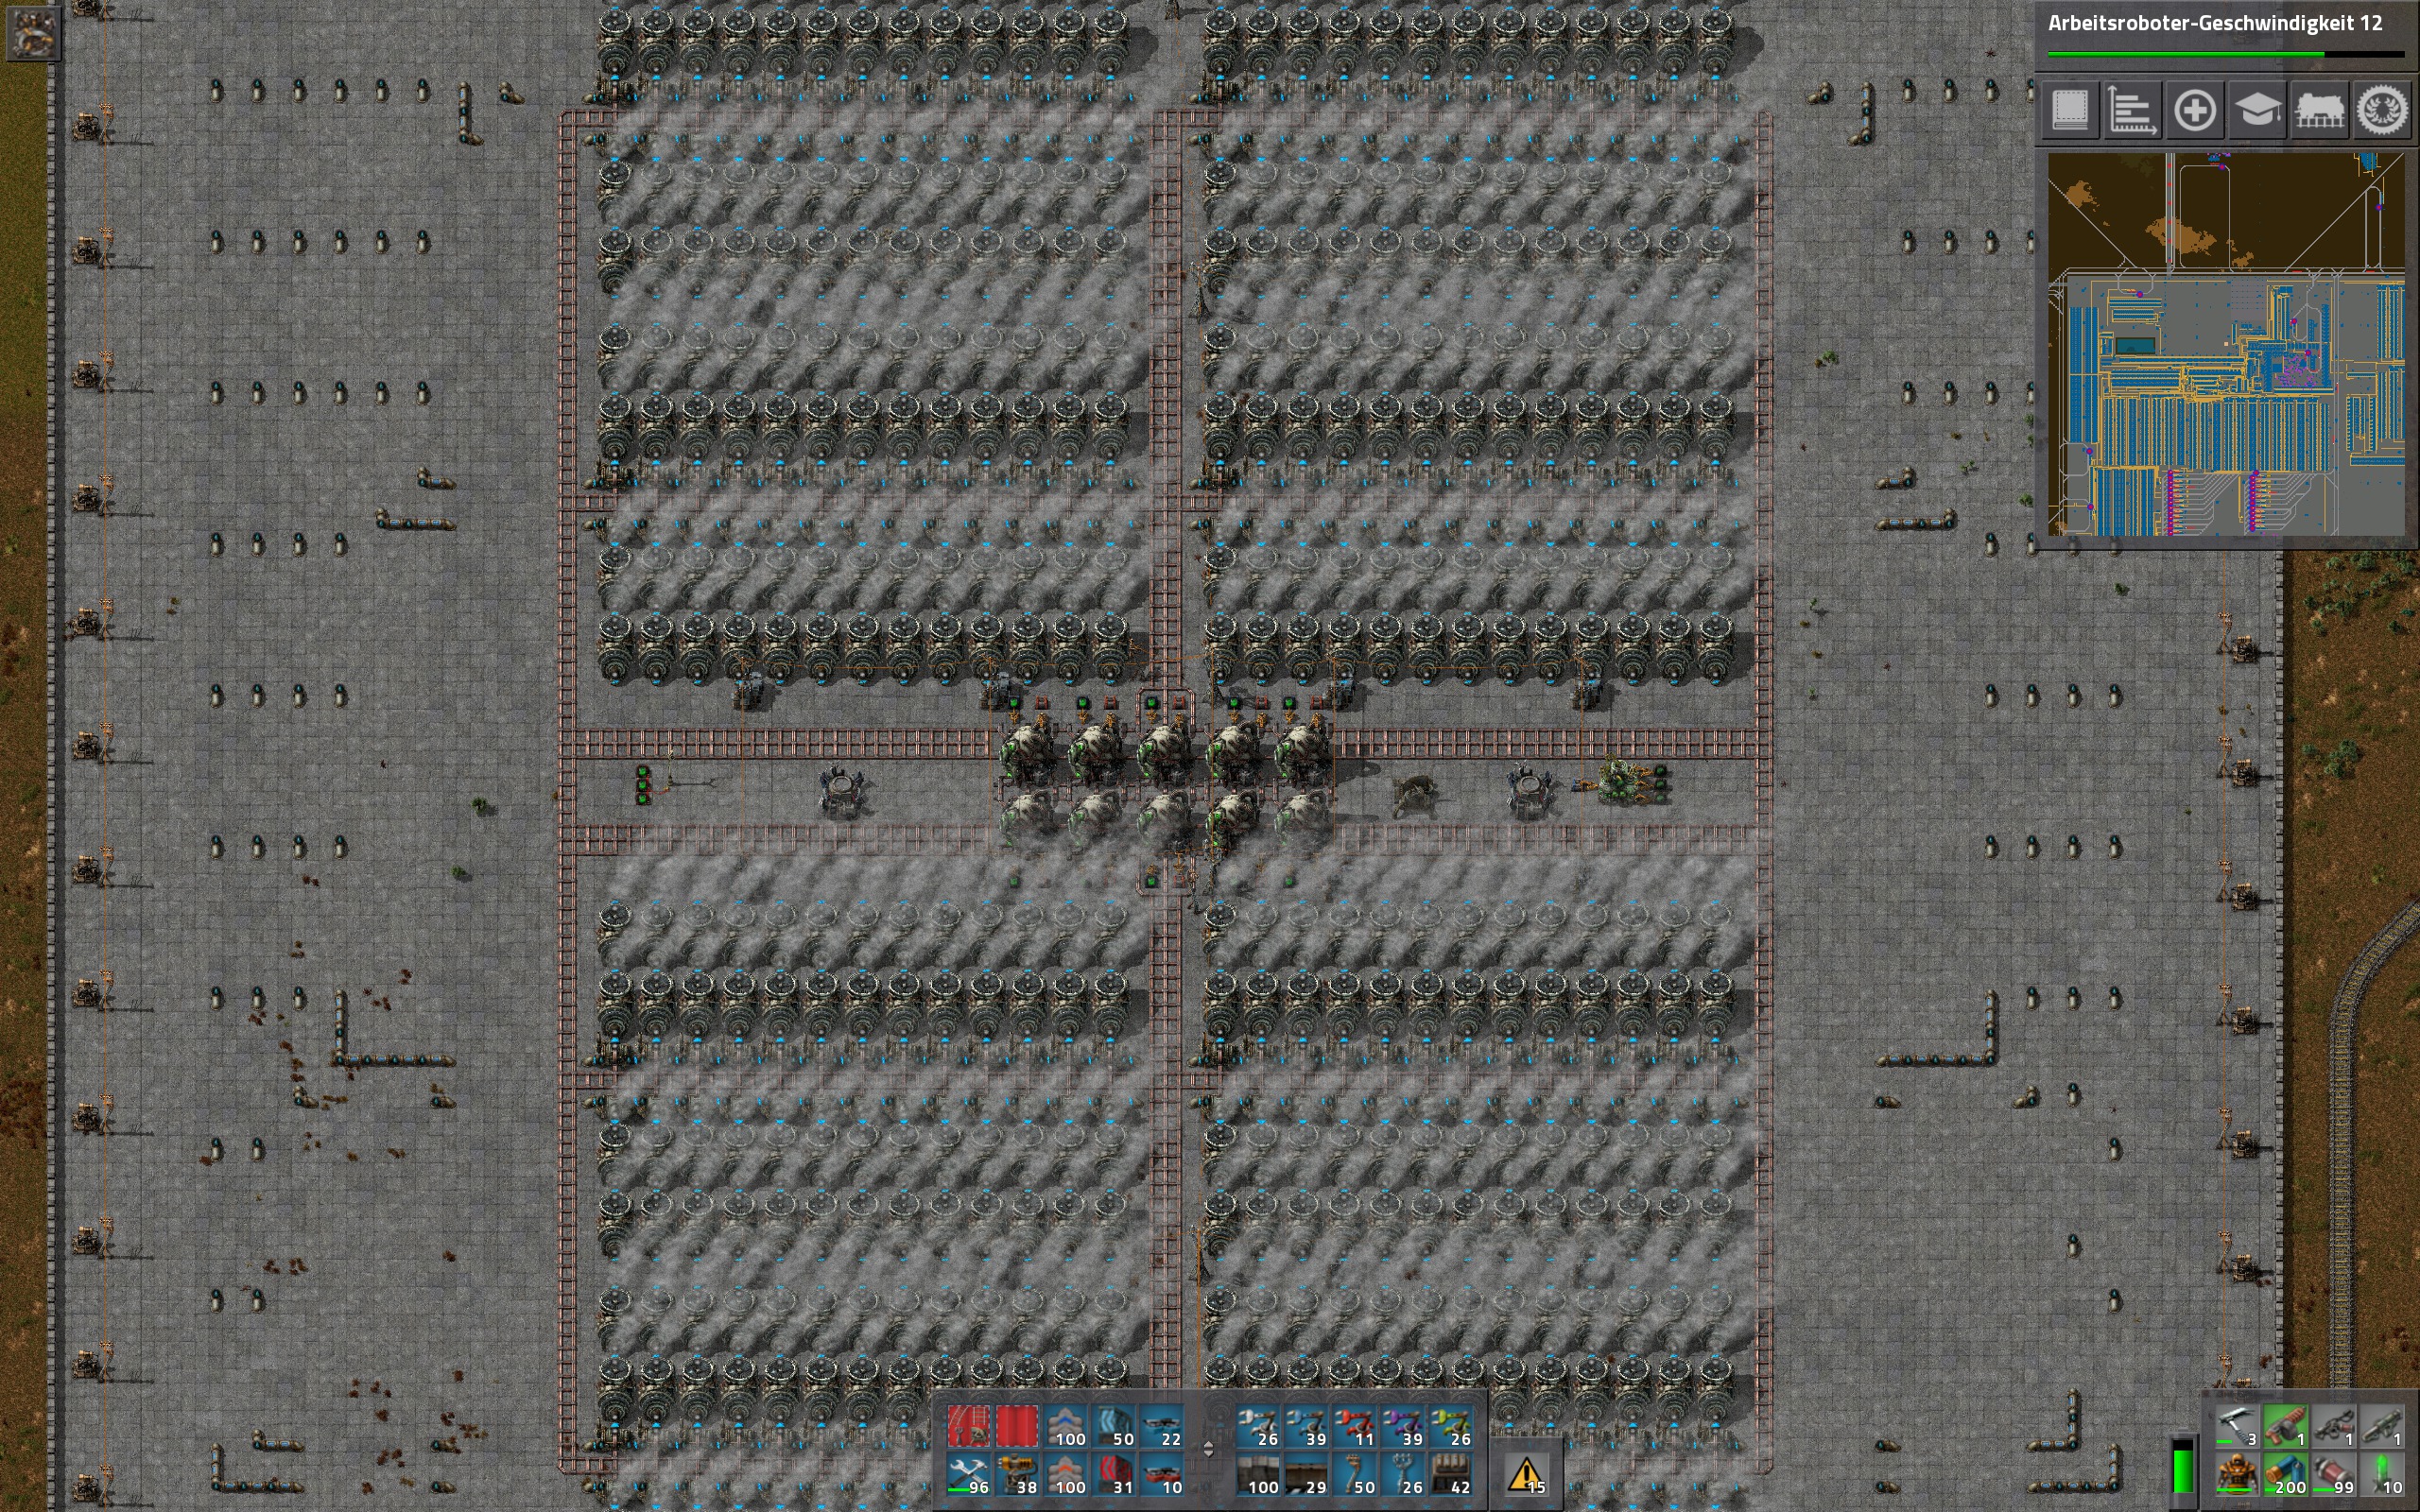 My power plant running on 98% capacity.